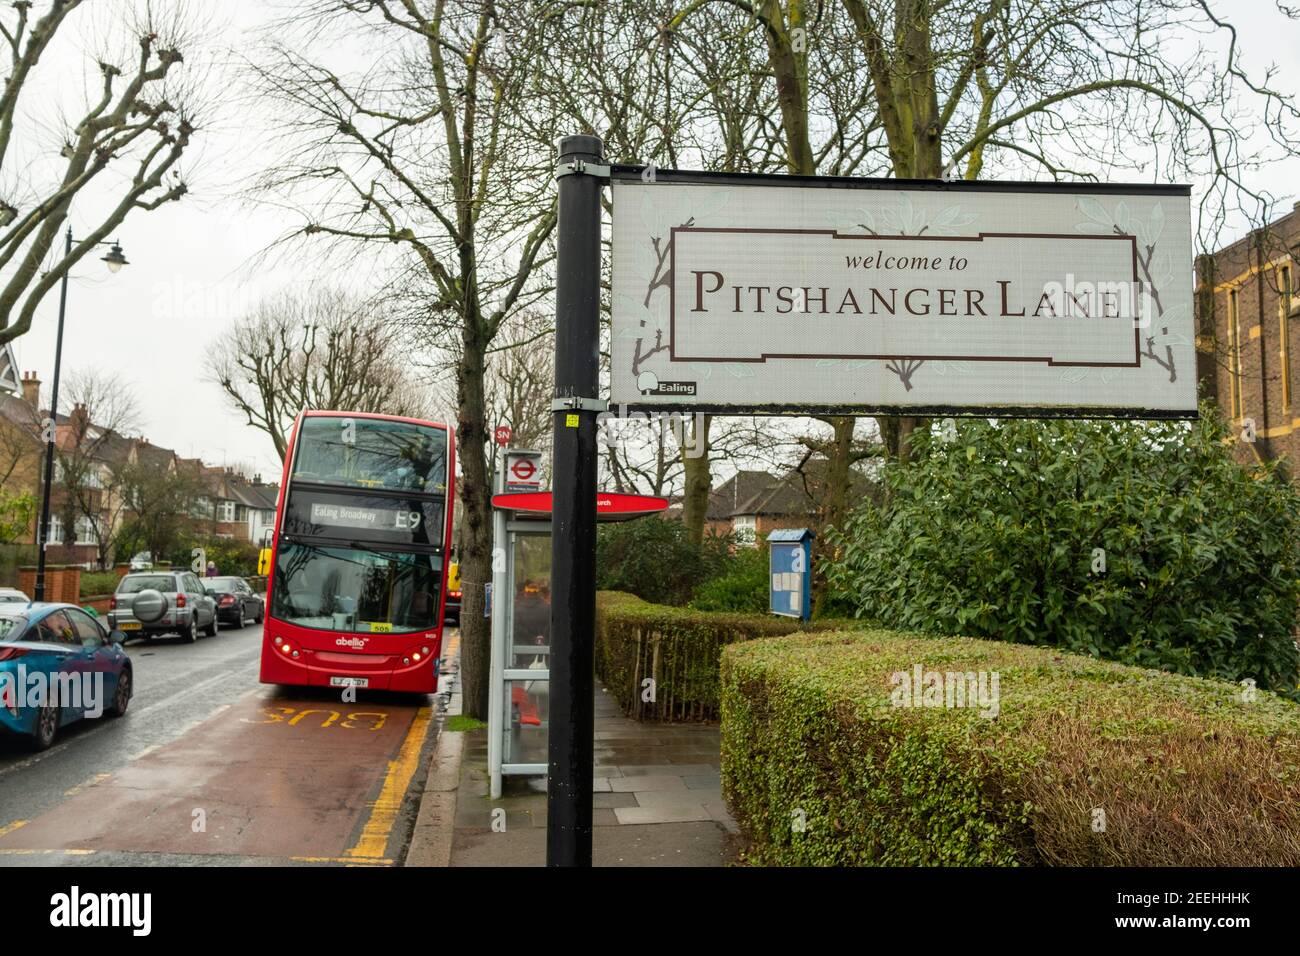 Londra - Febbraio 2021: Pitshanger Lane, una strada suburbana di negozi e case a Ealing, Londra ovest Foto Stock